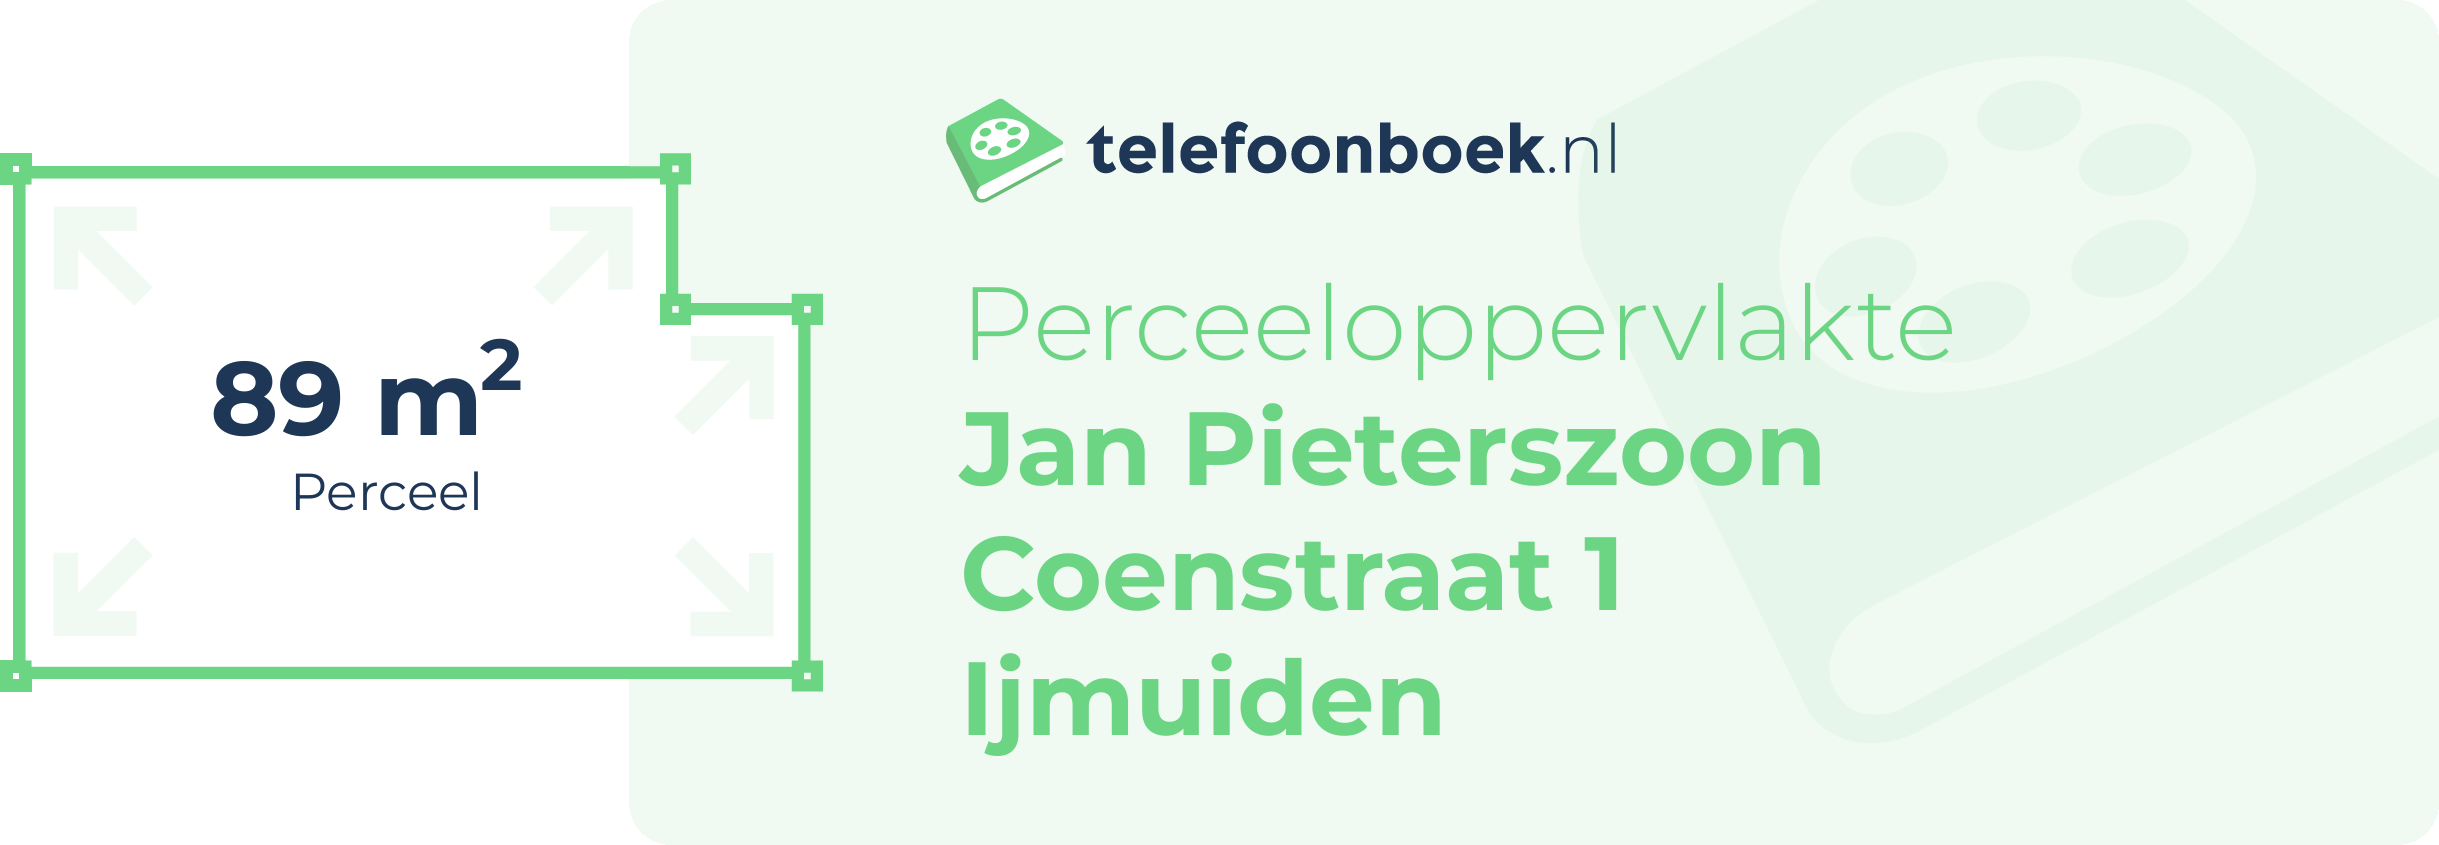 Perceeloppervlakte Jan Pieterszoon Coenstraat 1 Ijmuiden